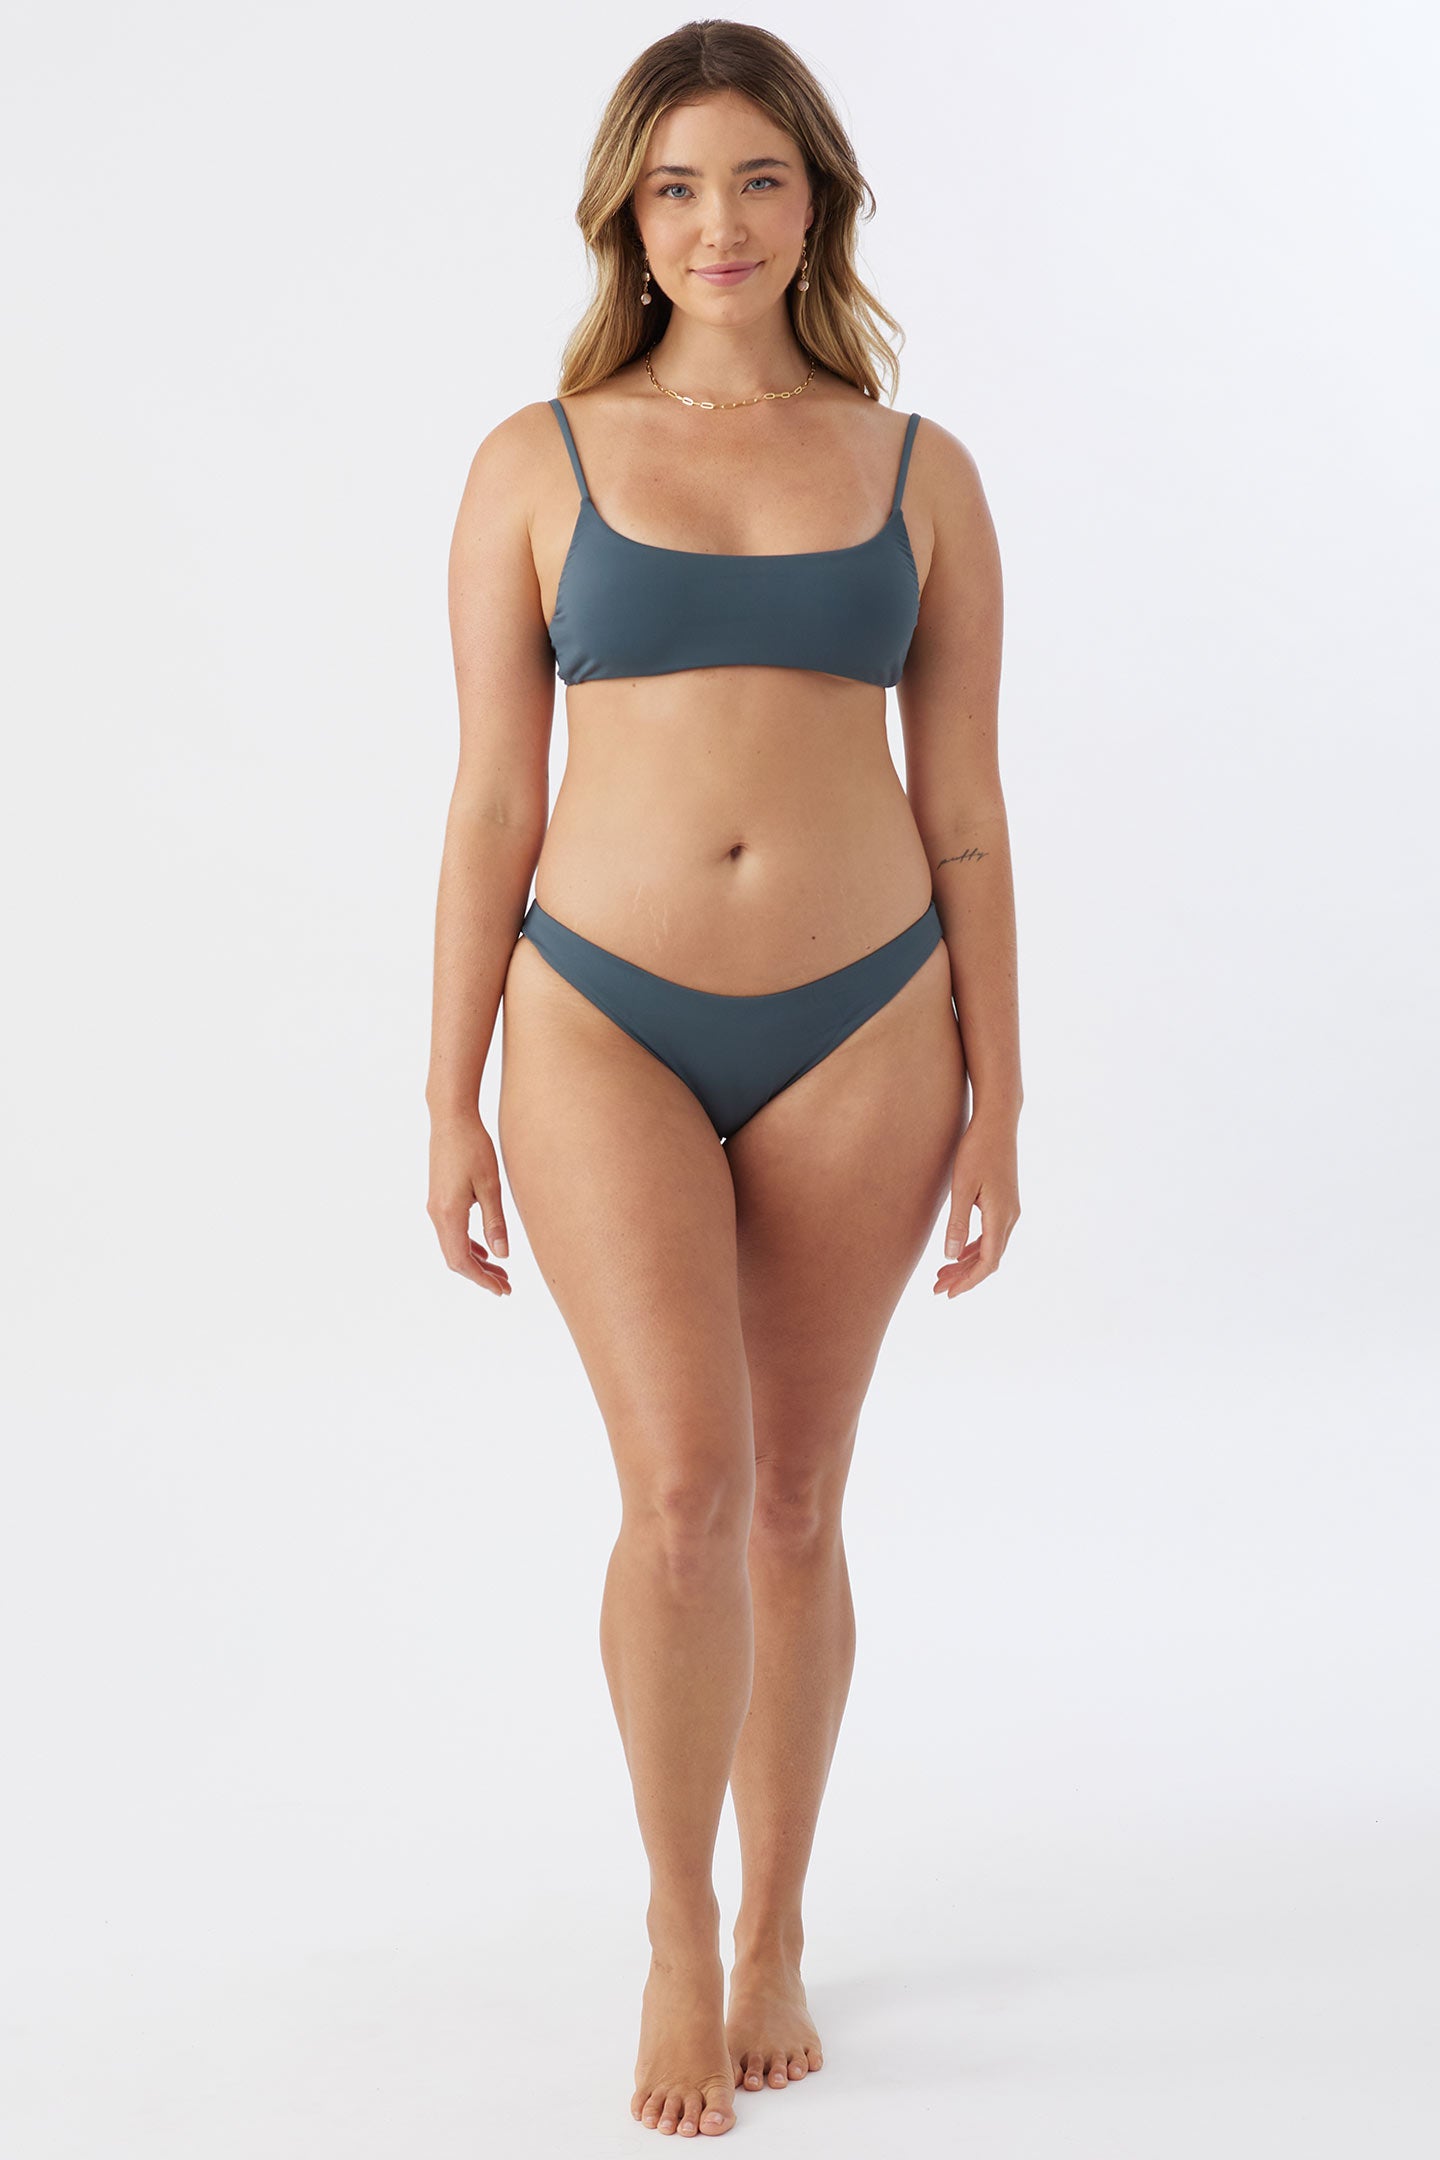 Nautica Women's Soho Solids Removable Soft Cup Bra Bikini Top